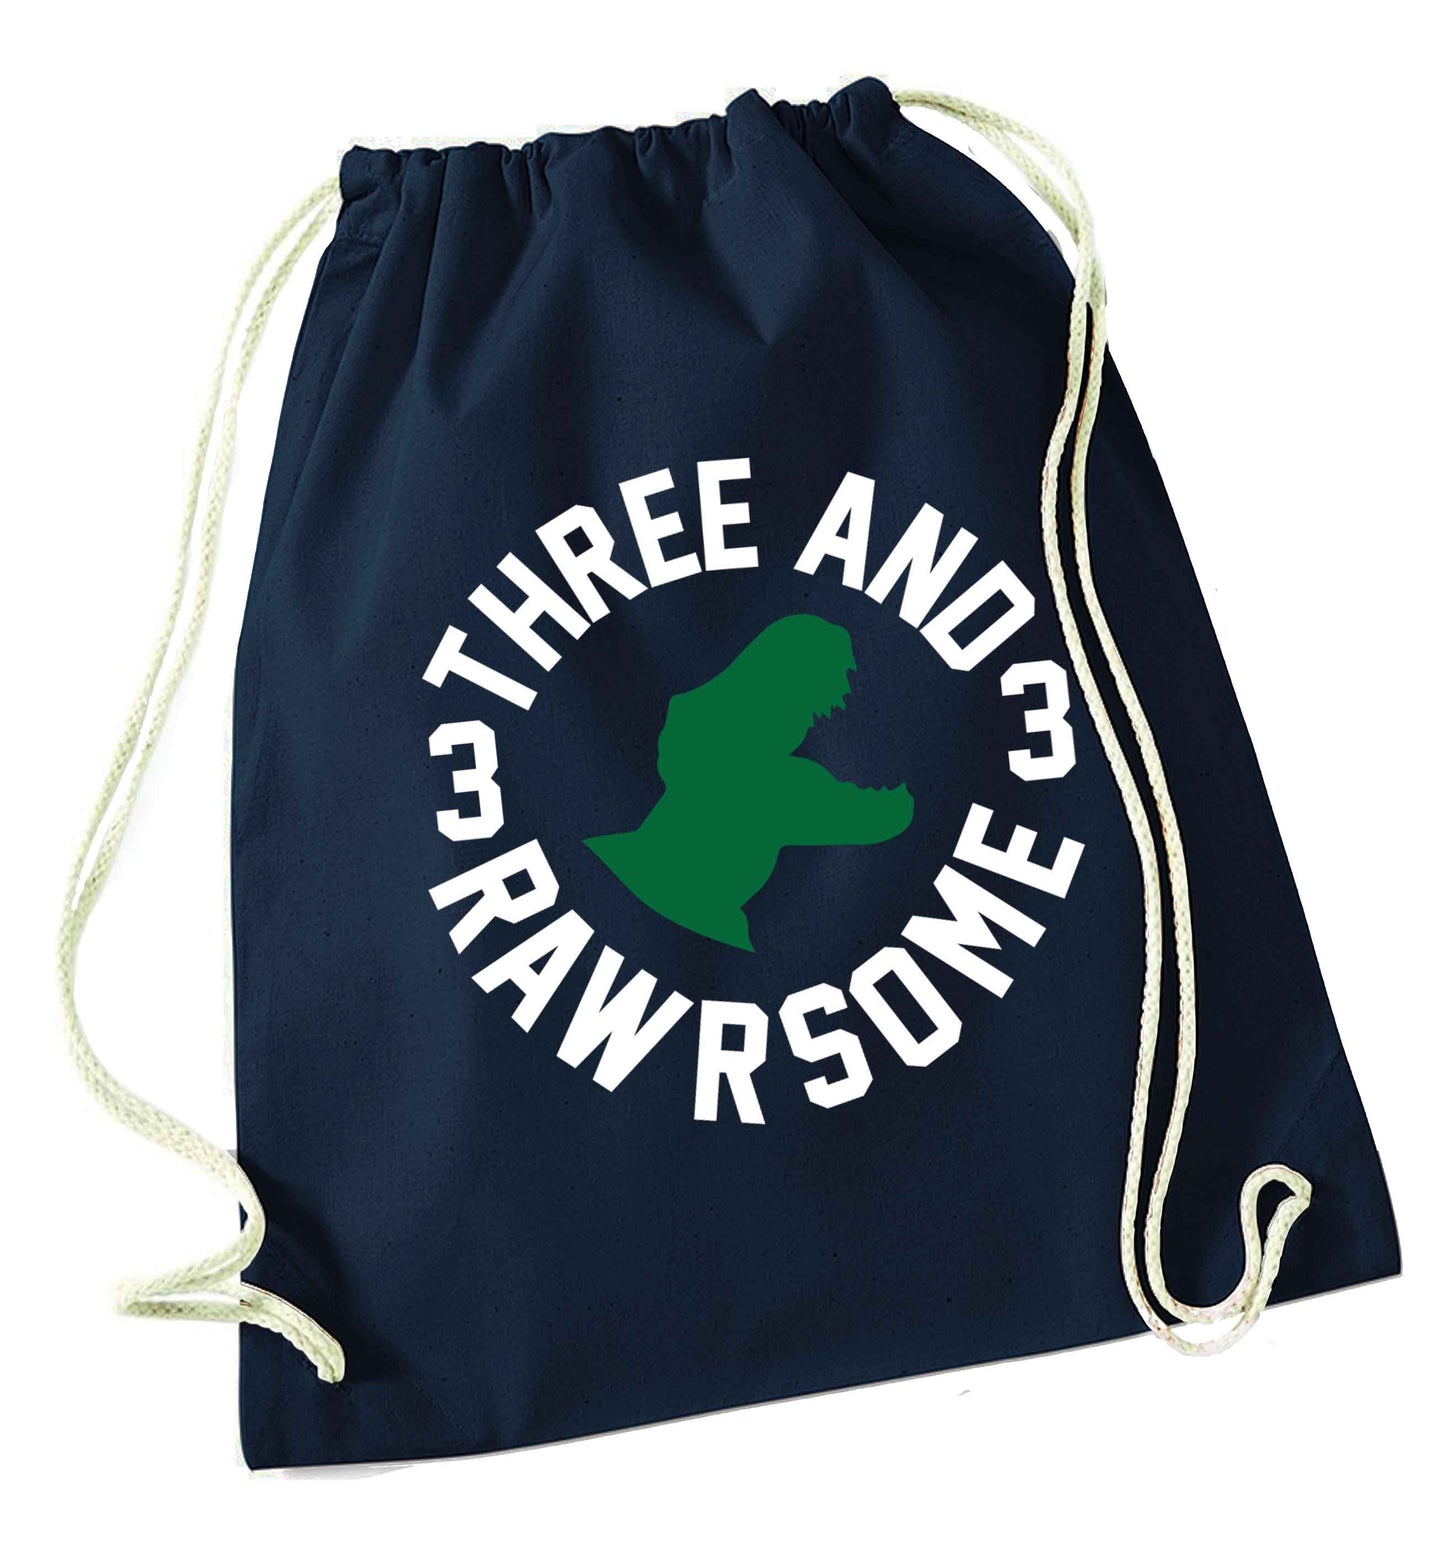 Three and rawrsome navy drawstring bag